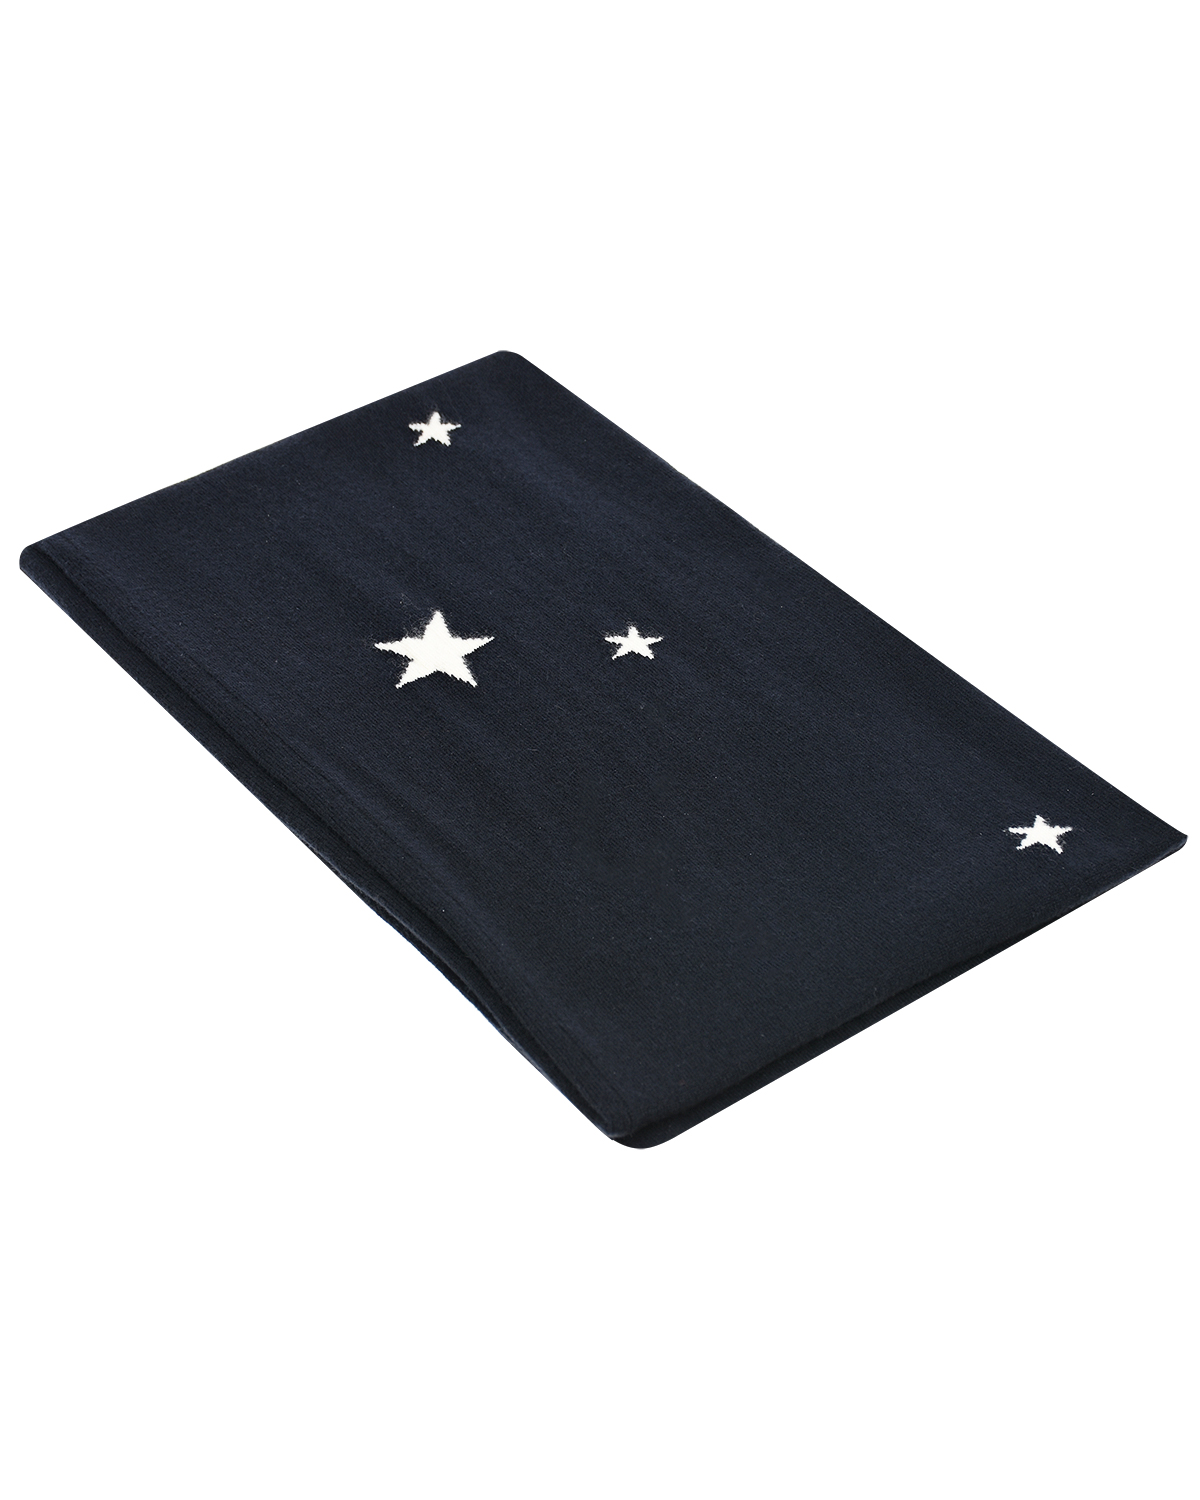 Шарф со звездами из кашемира Chinti&Parker, размер unica, цвет синий - фото 1